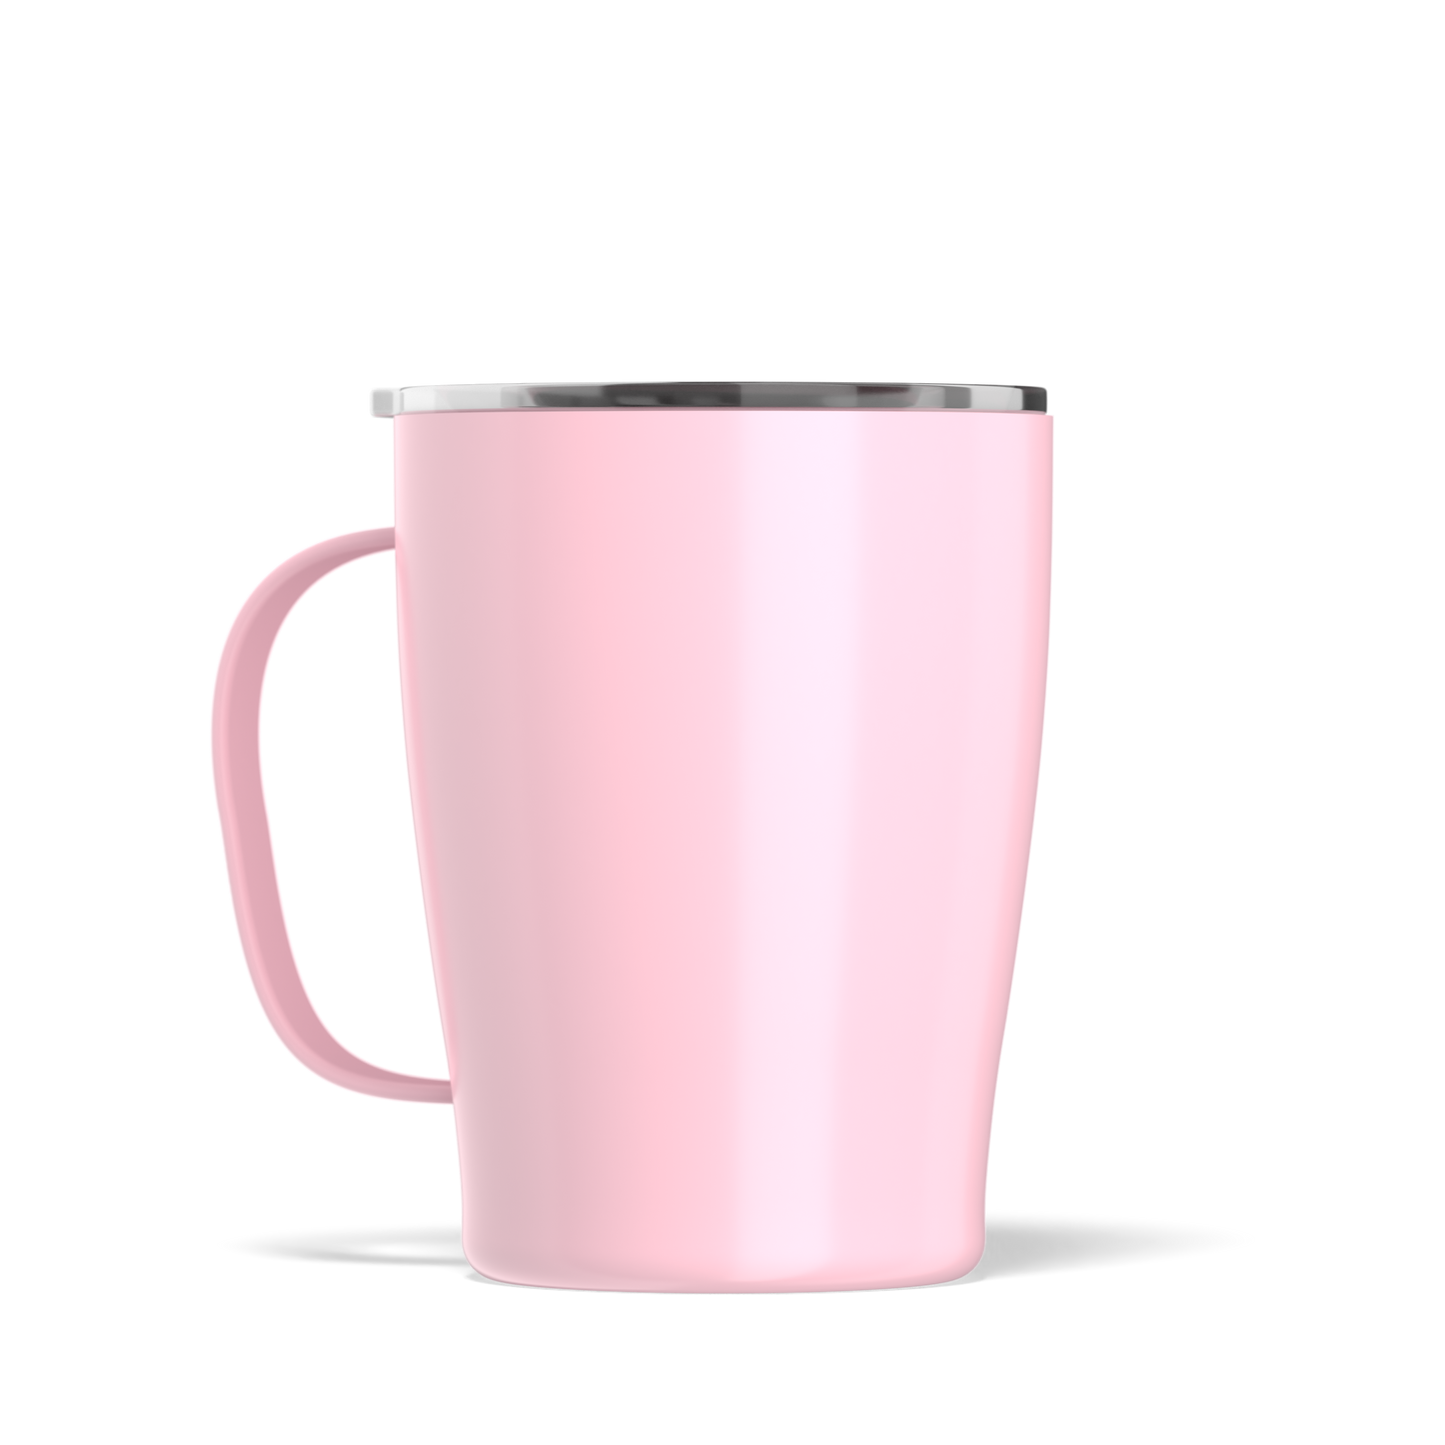 SAVOR 18oz Stainless Steel Insulated Travel Mug - Pink